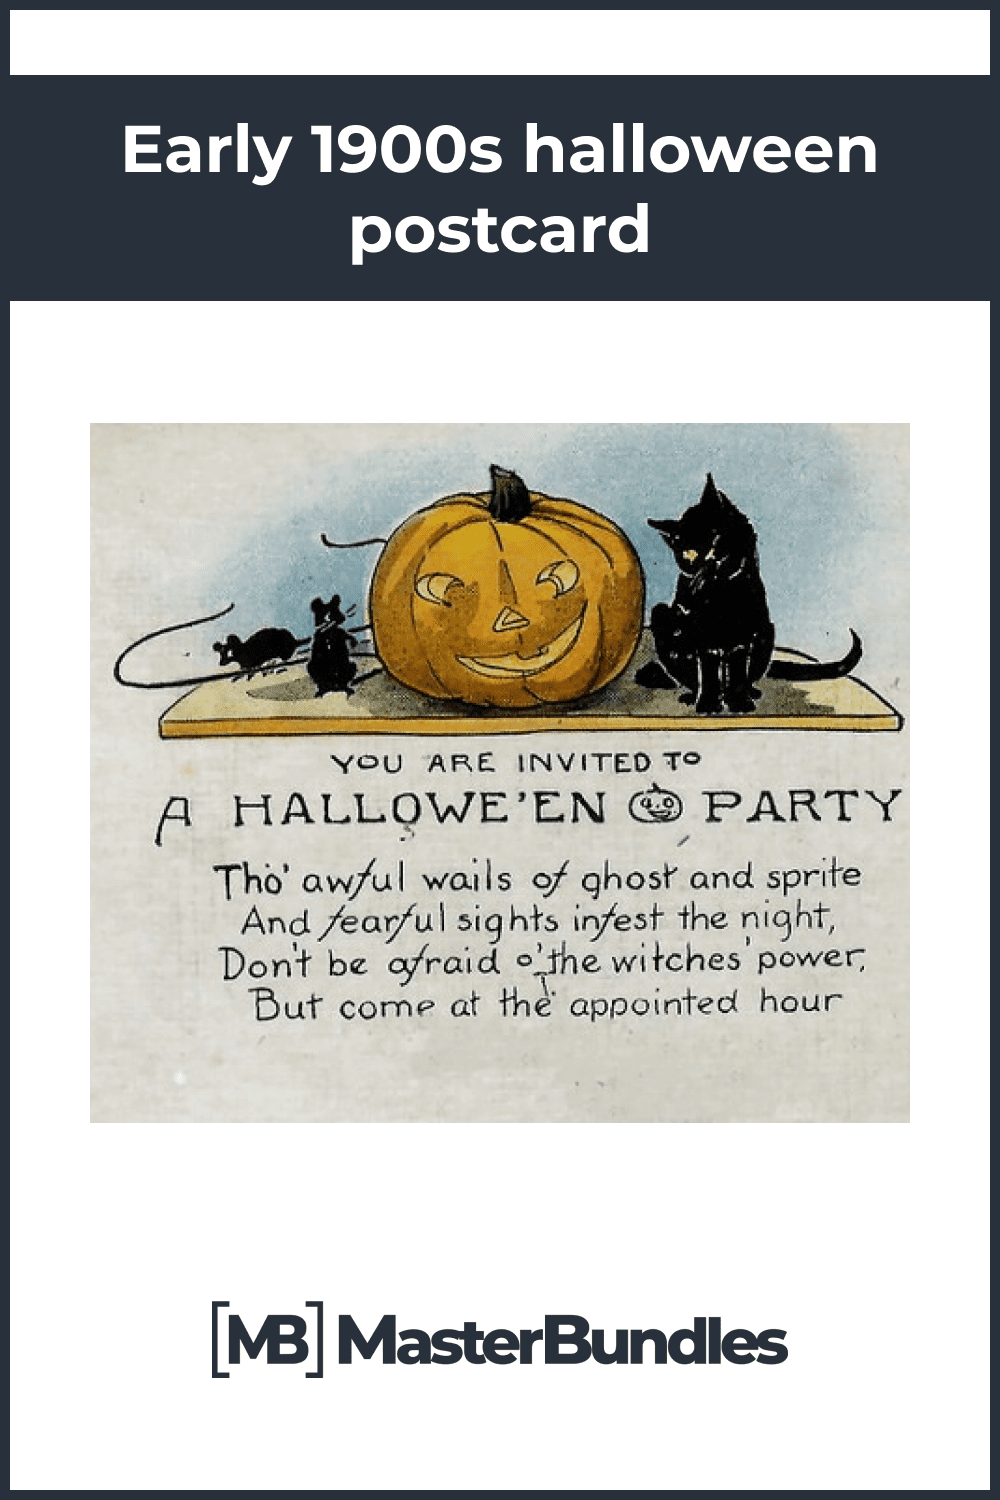 Vintage Halloween invitation card with cute pumpkin.